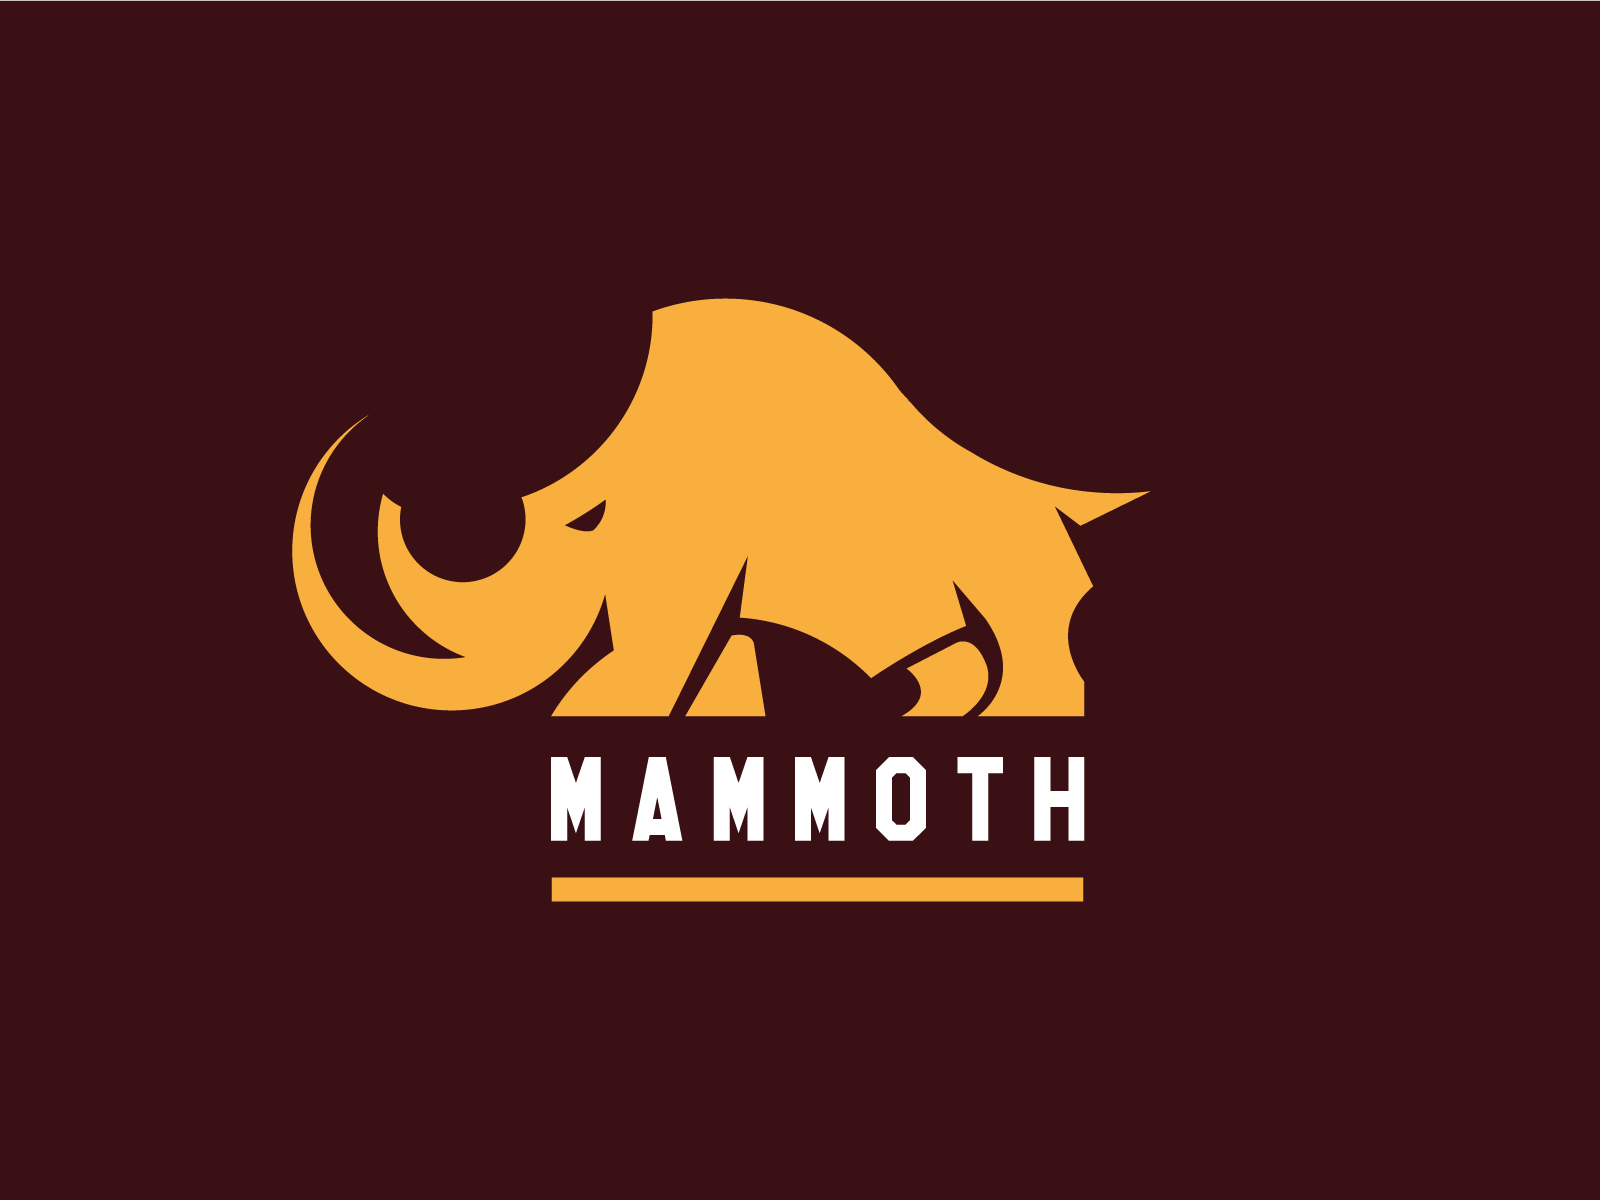 Mammoth by Andrius Tamosaitis on Dribbble